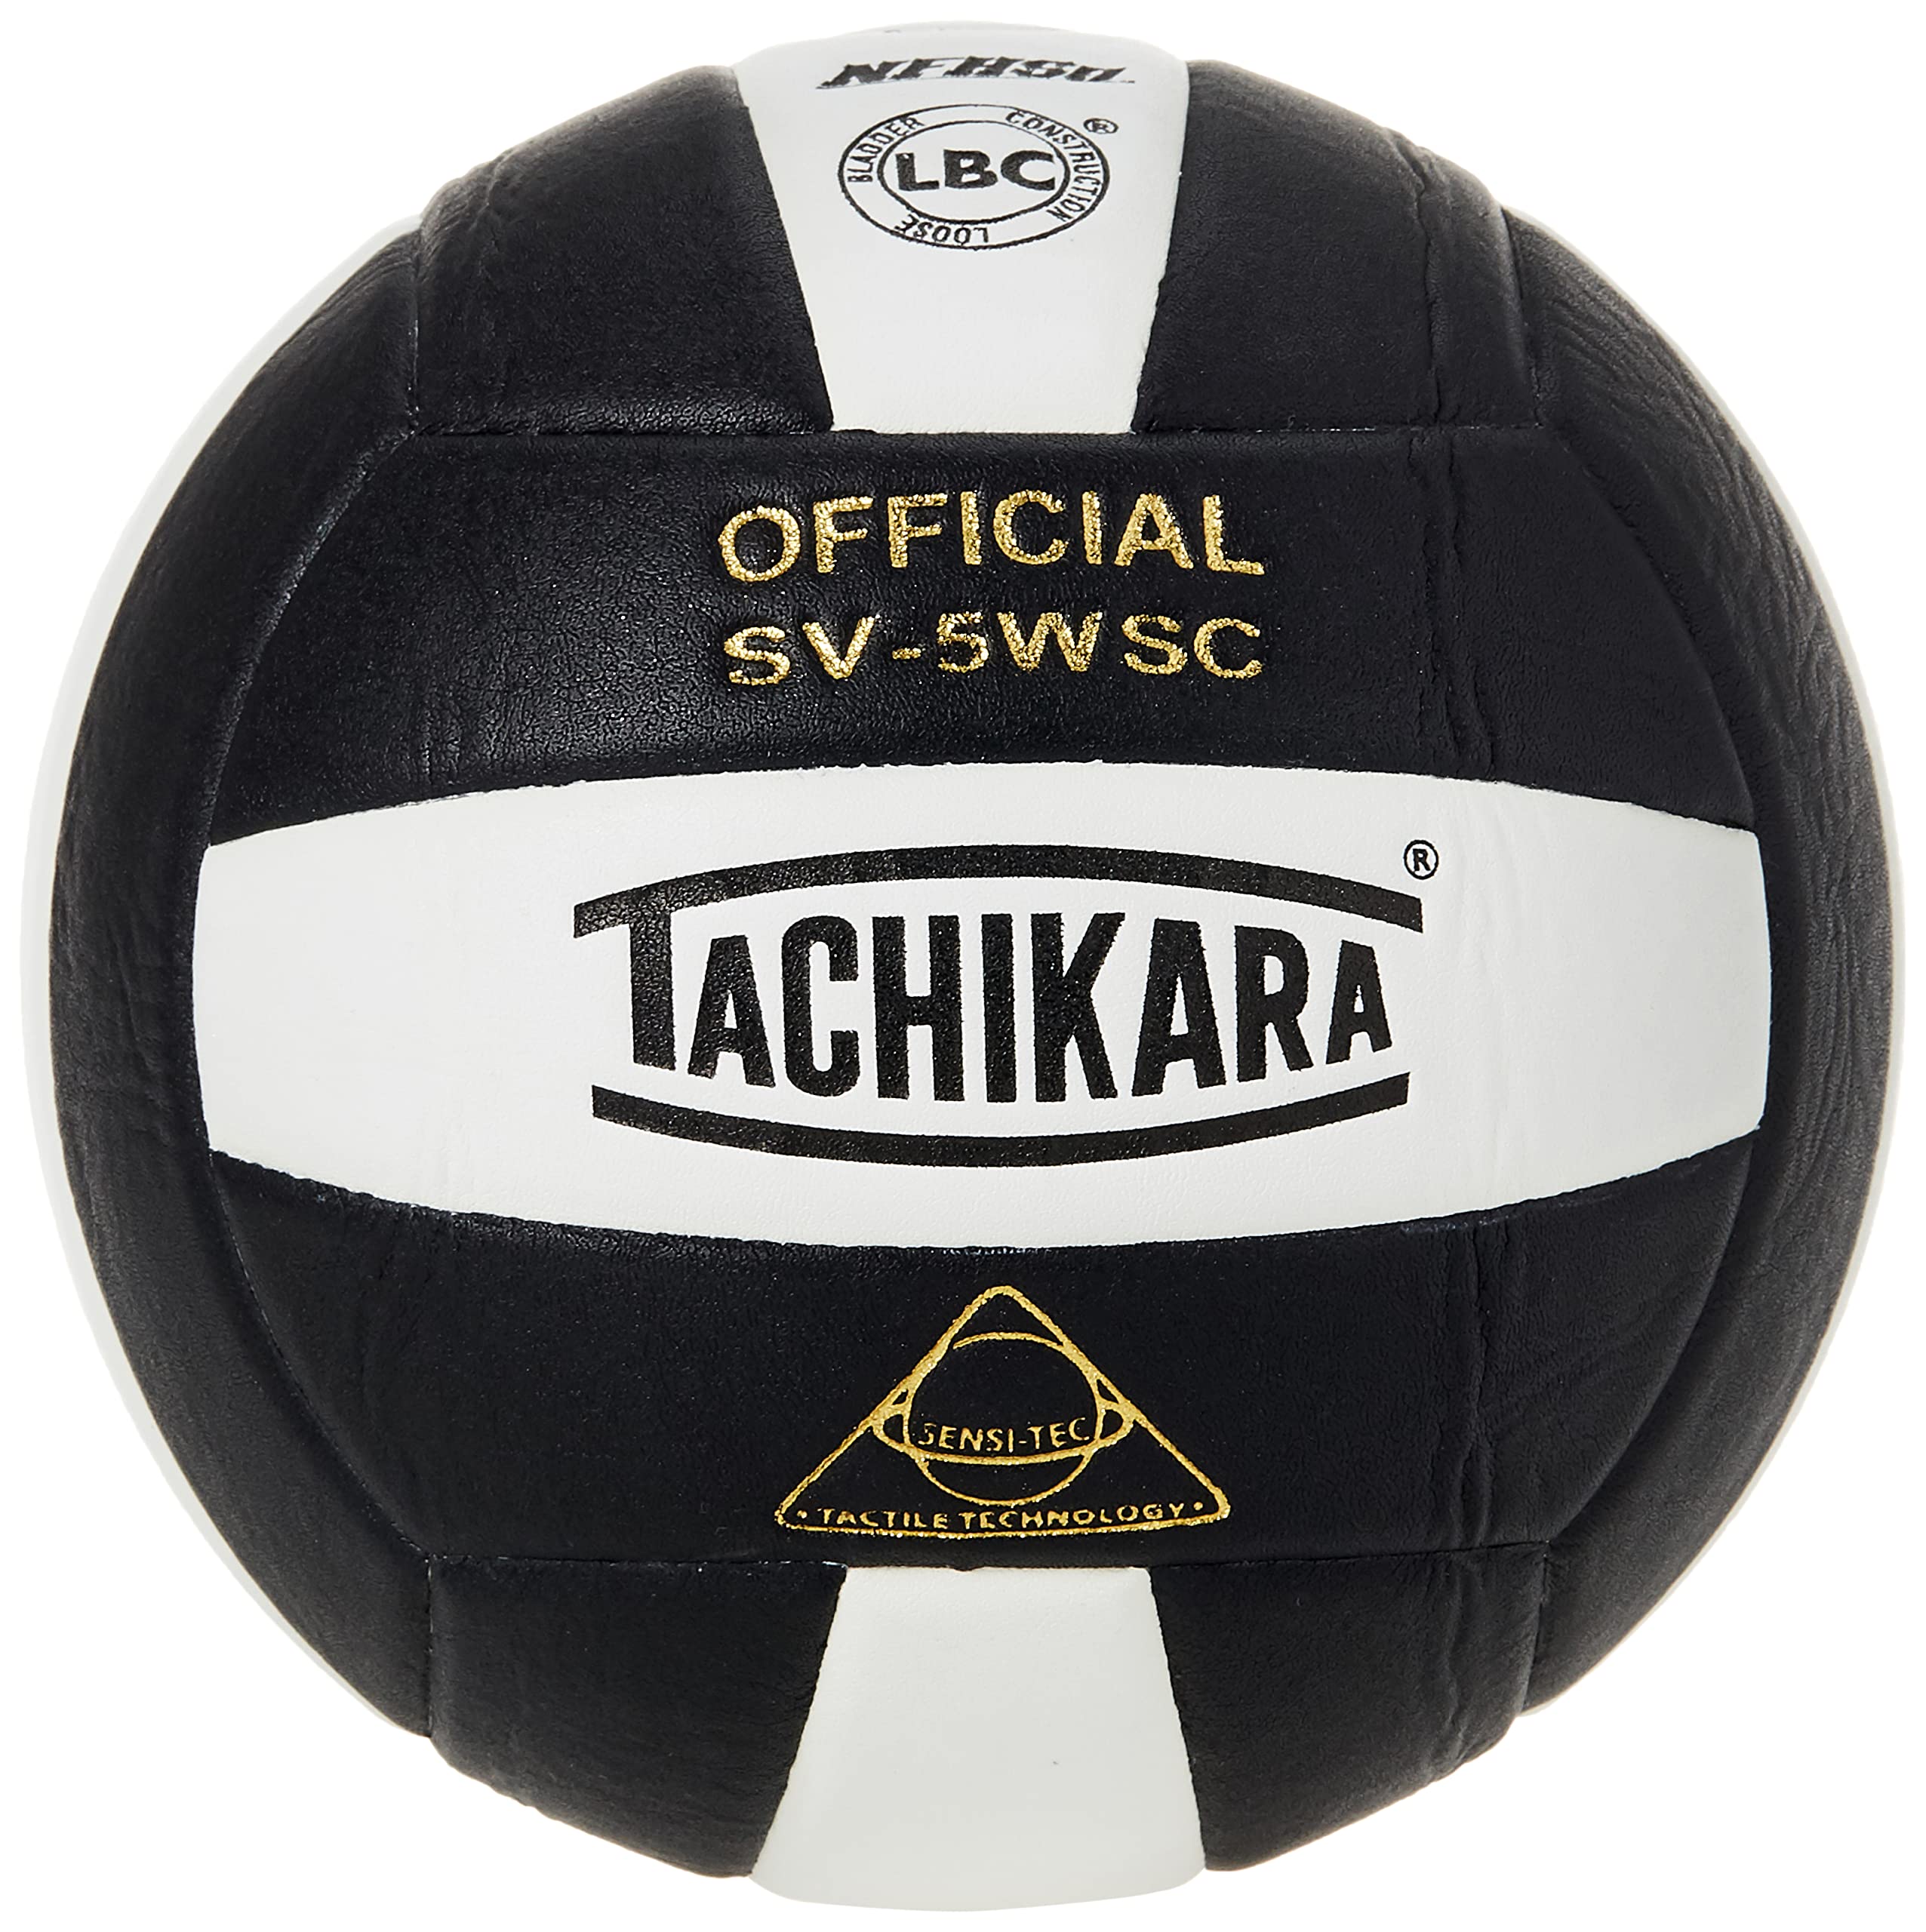 Tachikara Sensi-Tec コンポジット SV-5WSC バレーボール (EA)...